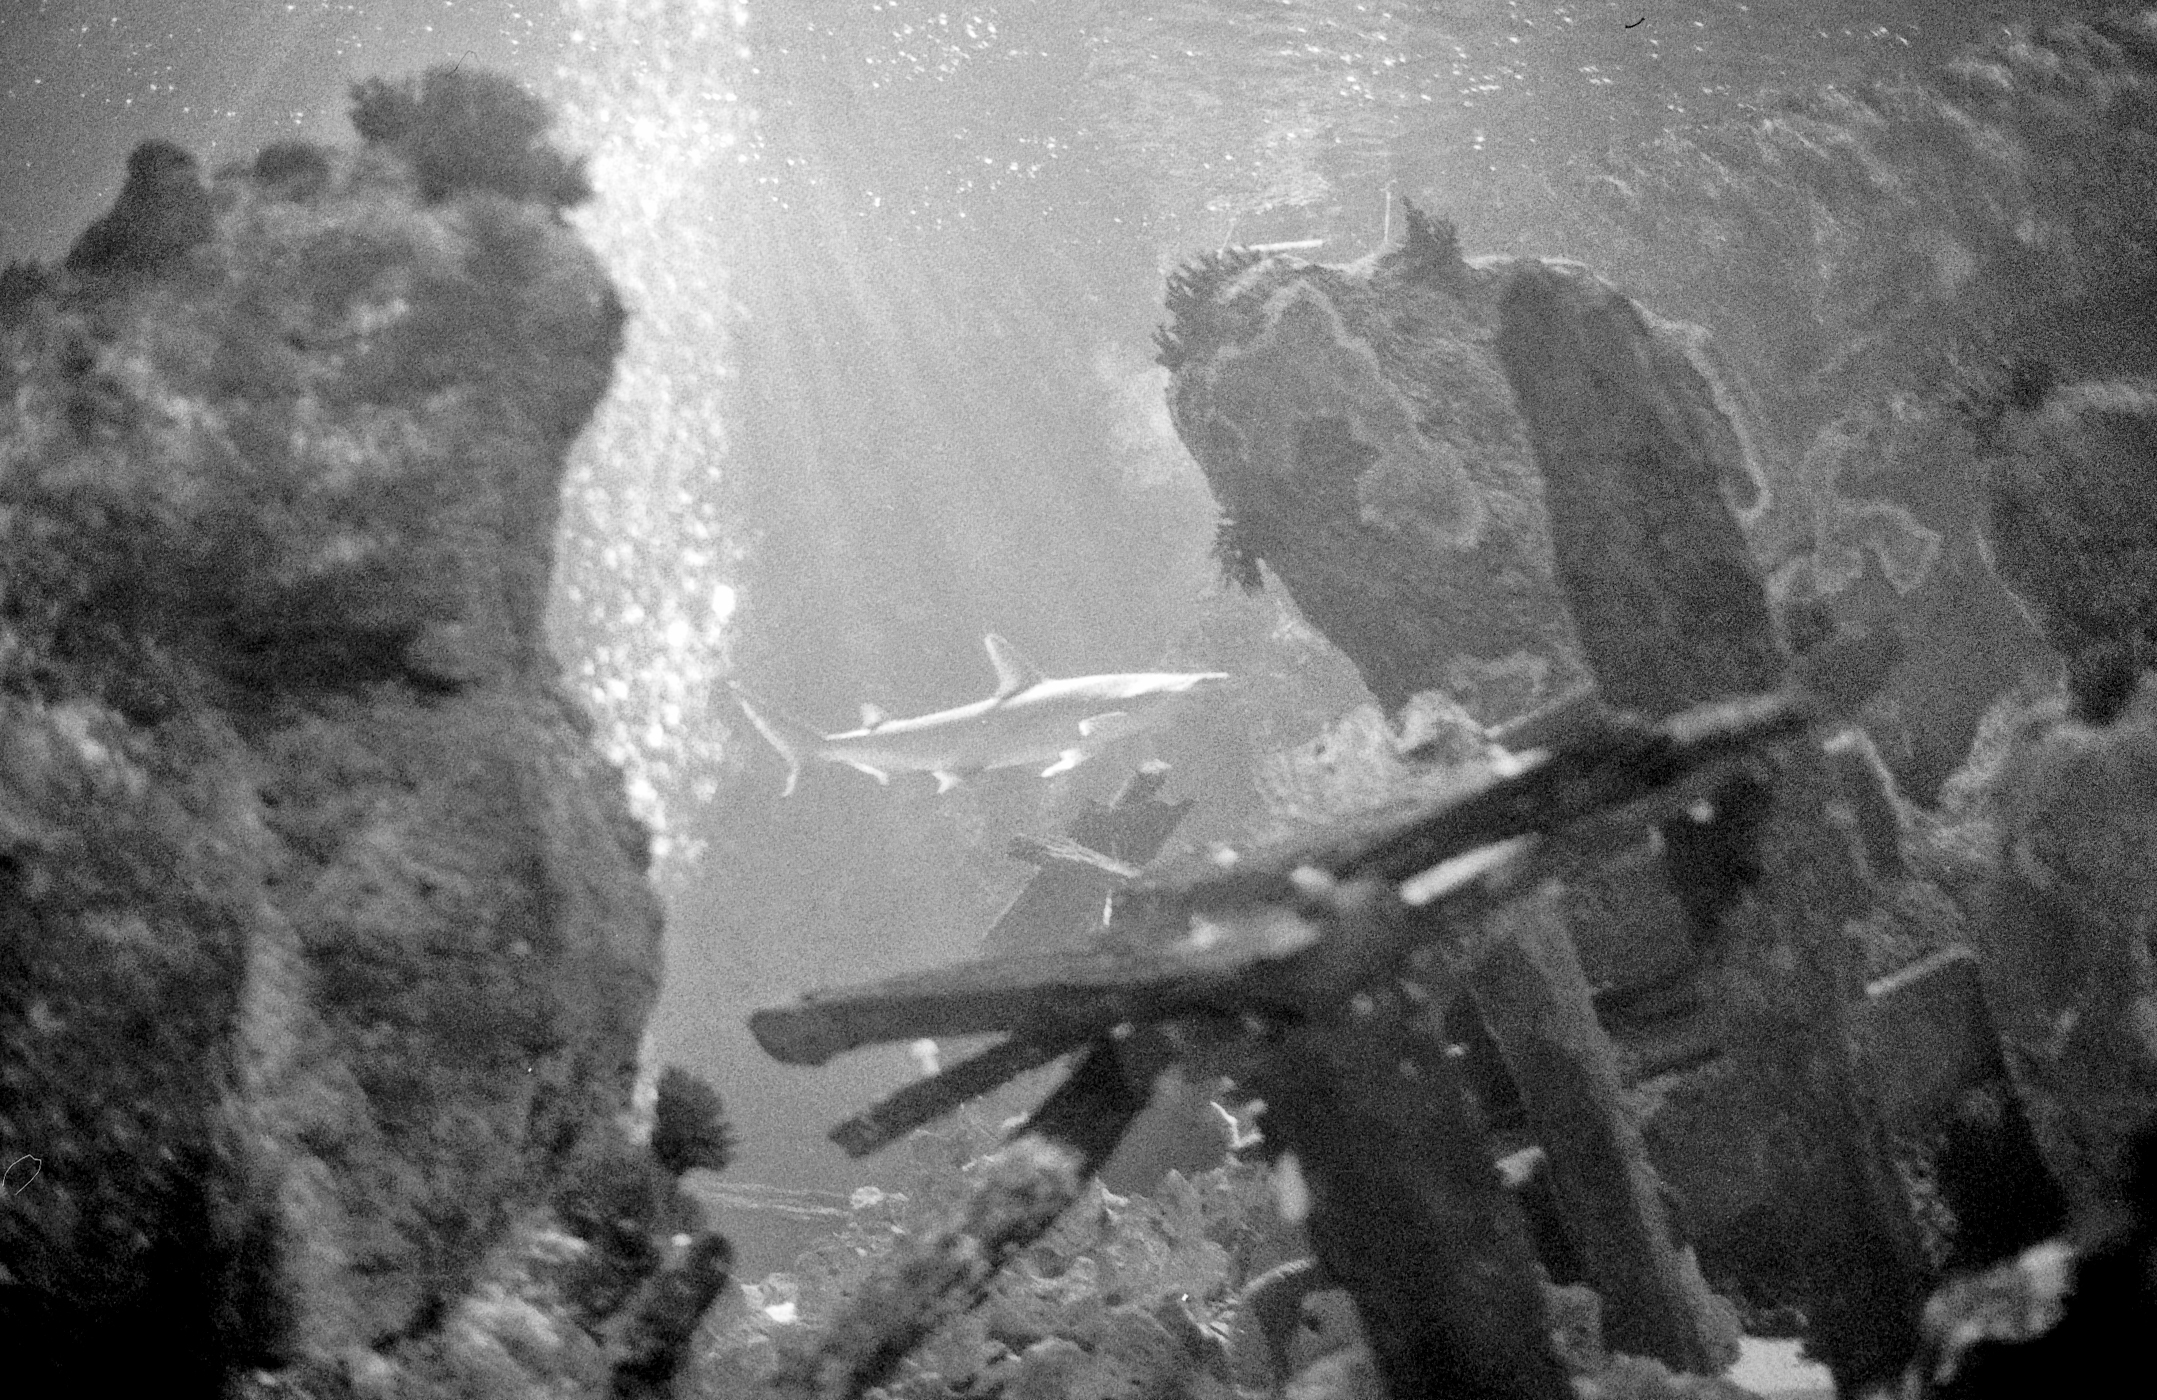 Shark behind rocks (Pic: Stephen Dowling)